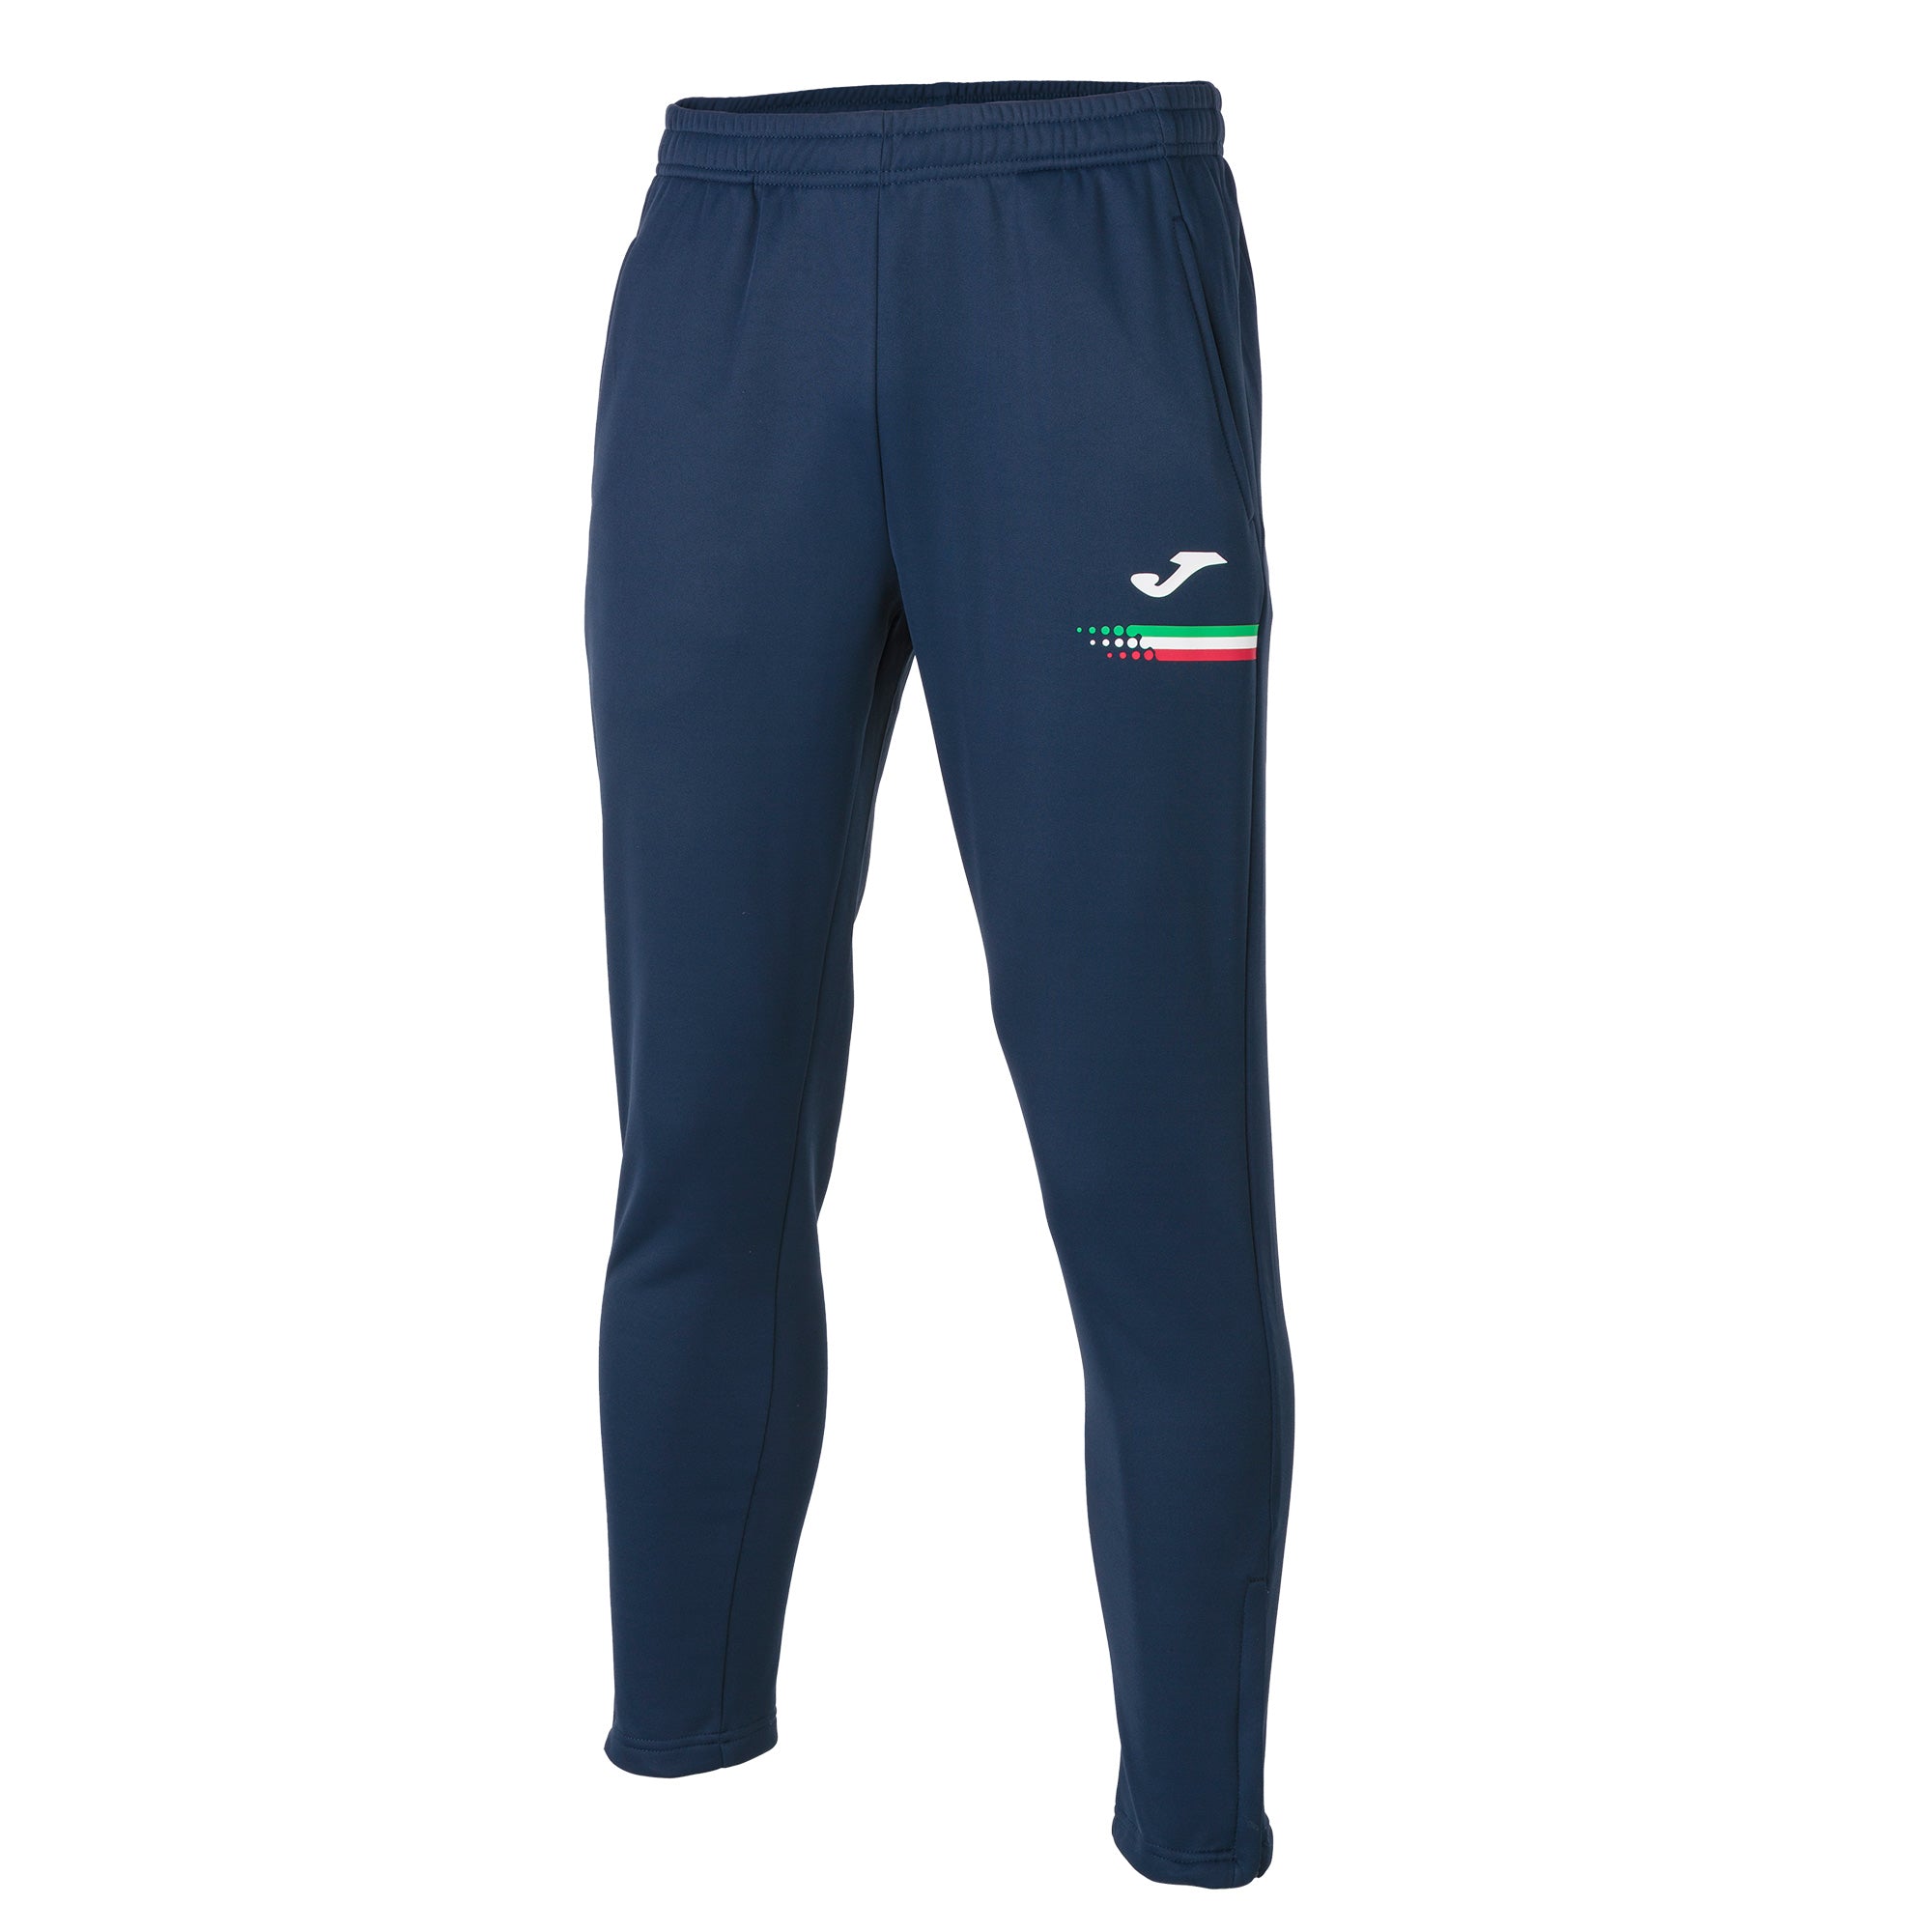 Federazione Italiana Tennis Men's Long Pants